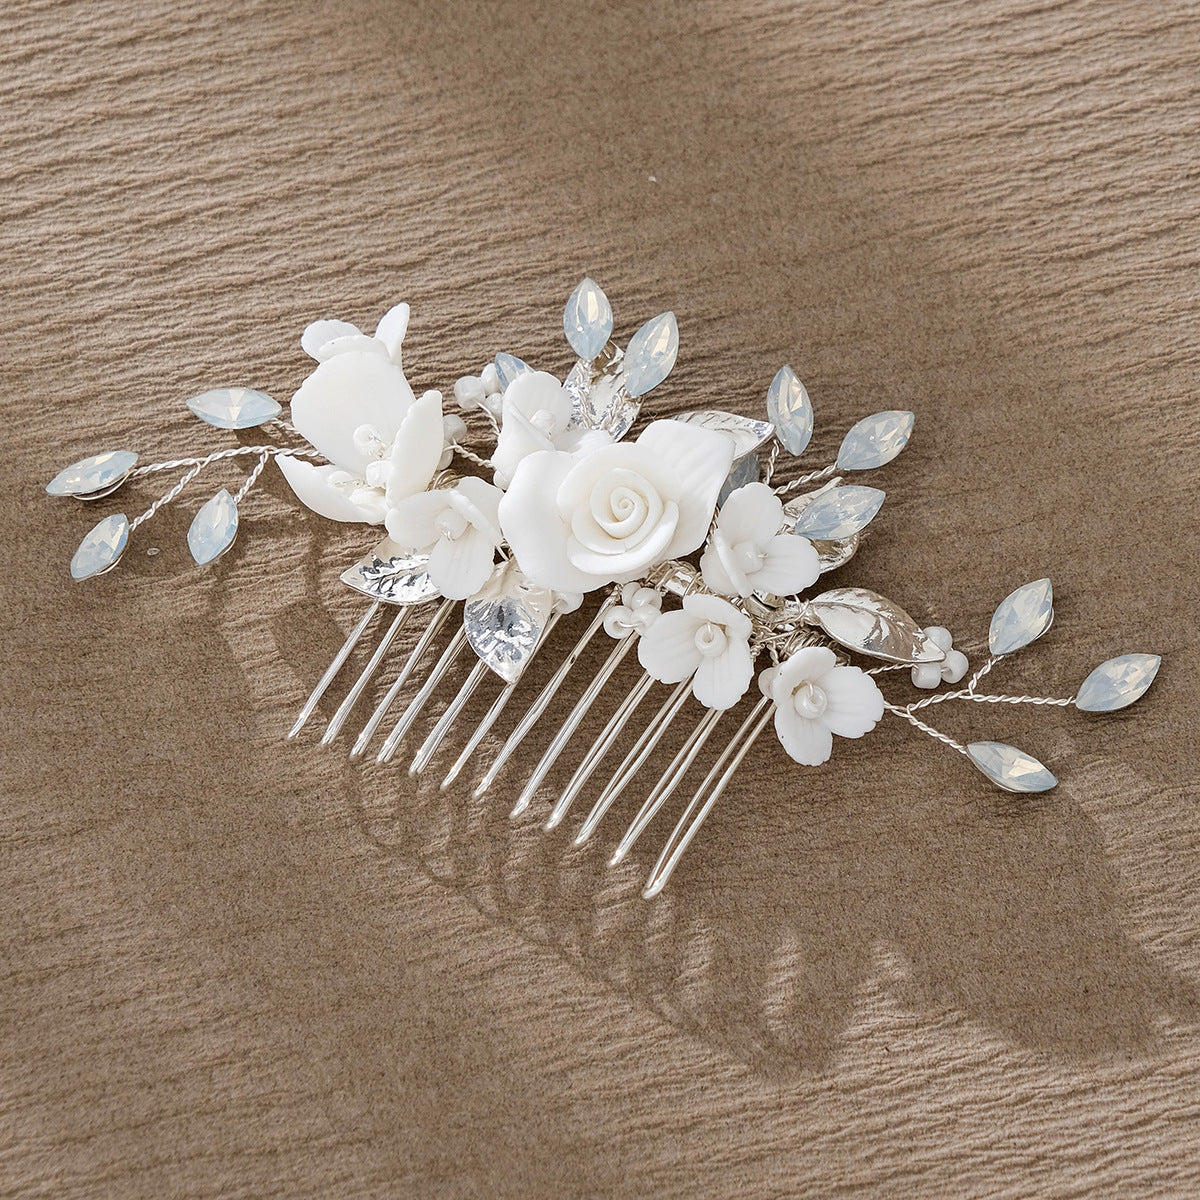 Bridal hair accessories Retro Jelly drill hand insert comb ceramic flower comb 733586558031